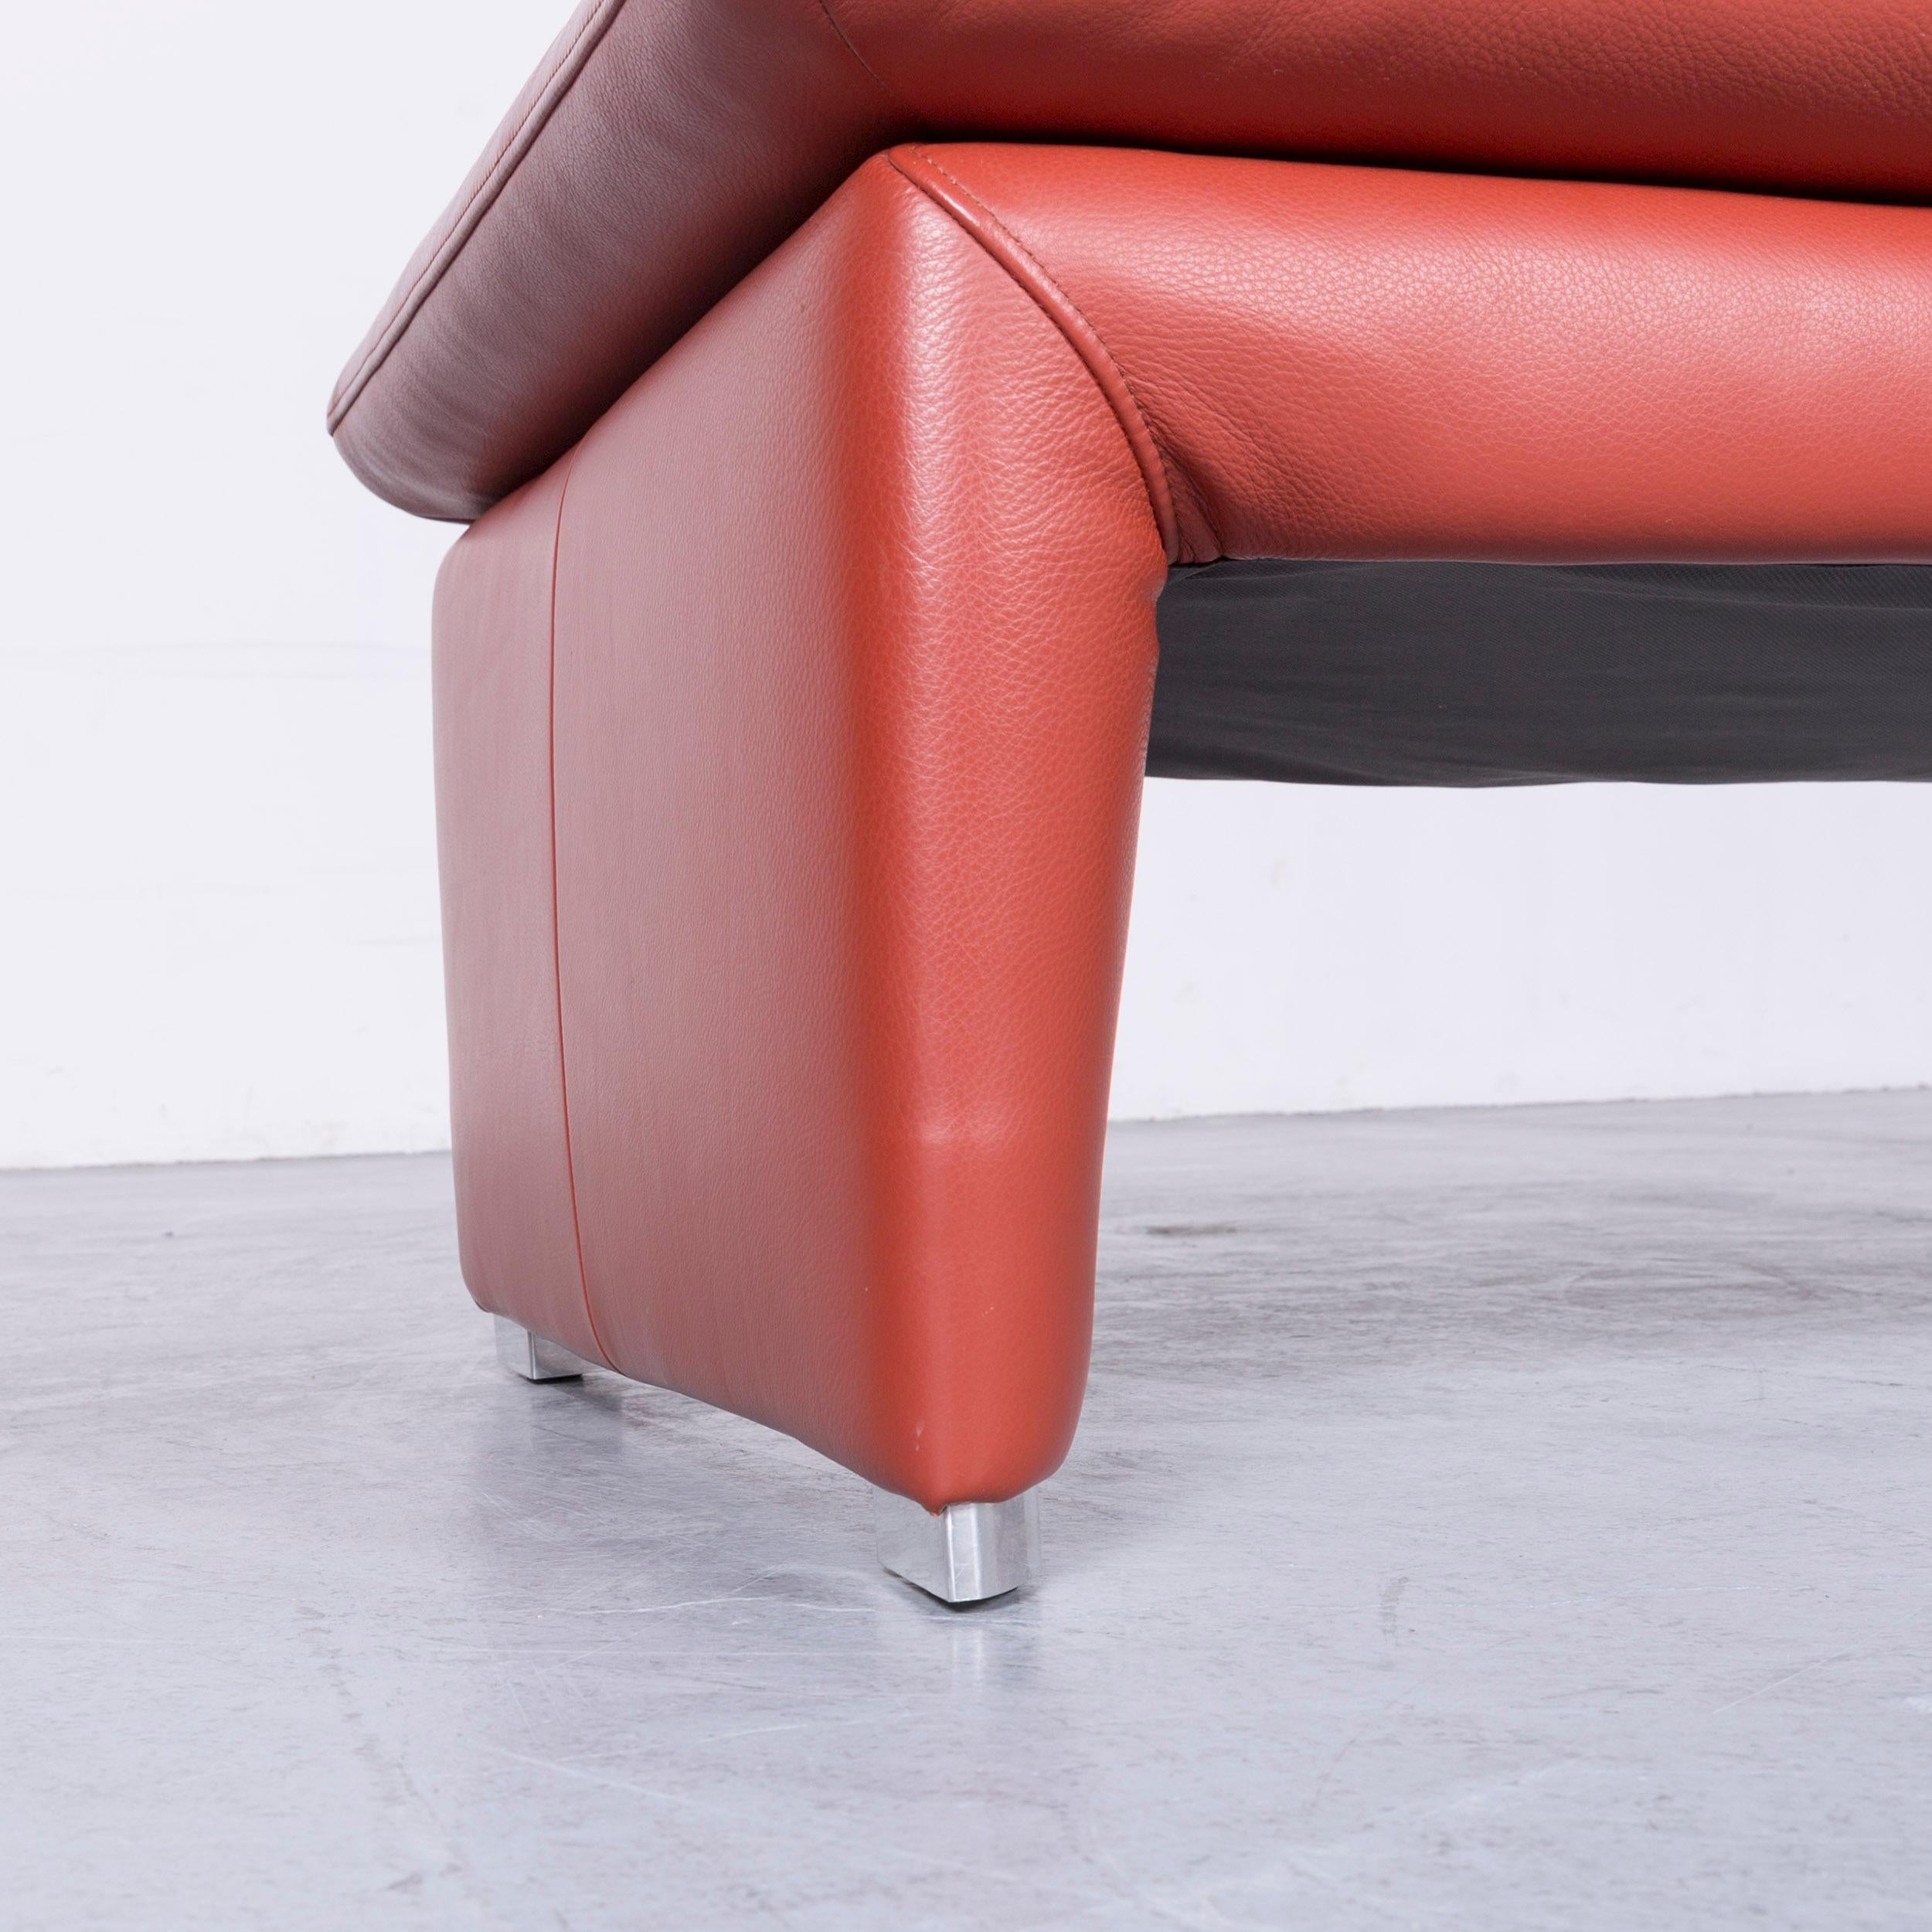 Laauser Corvus Designer Sofa Corner-Sofa Footstool Set Leather Red Couch 8